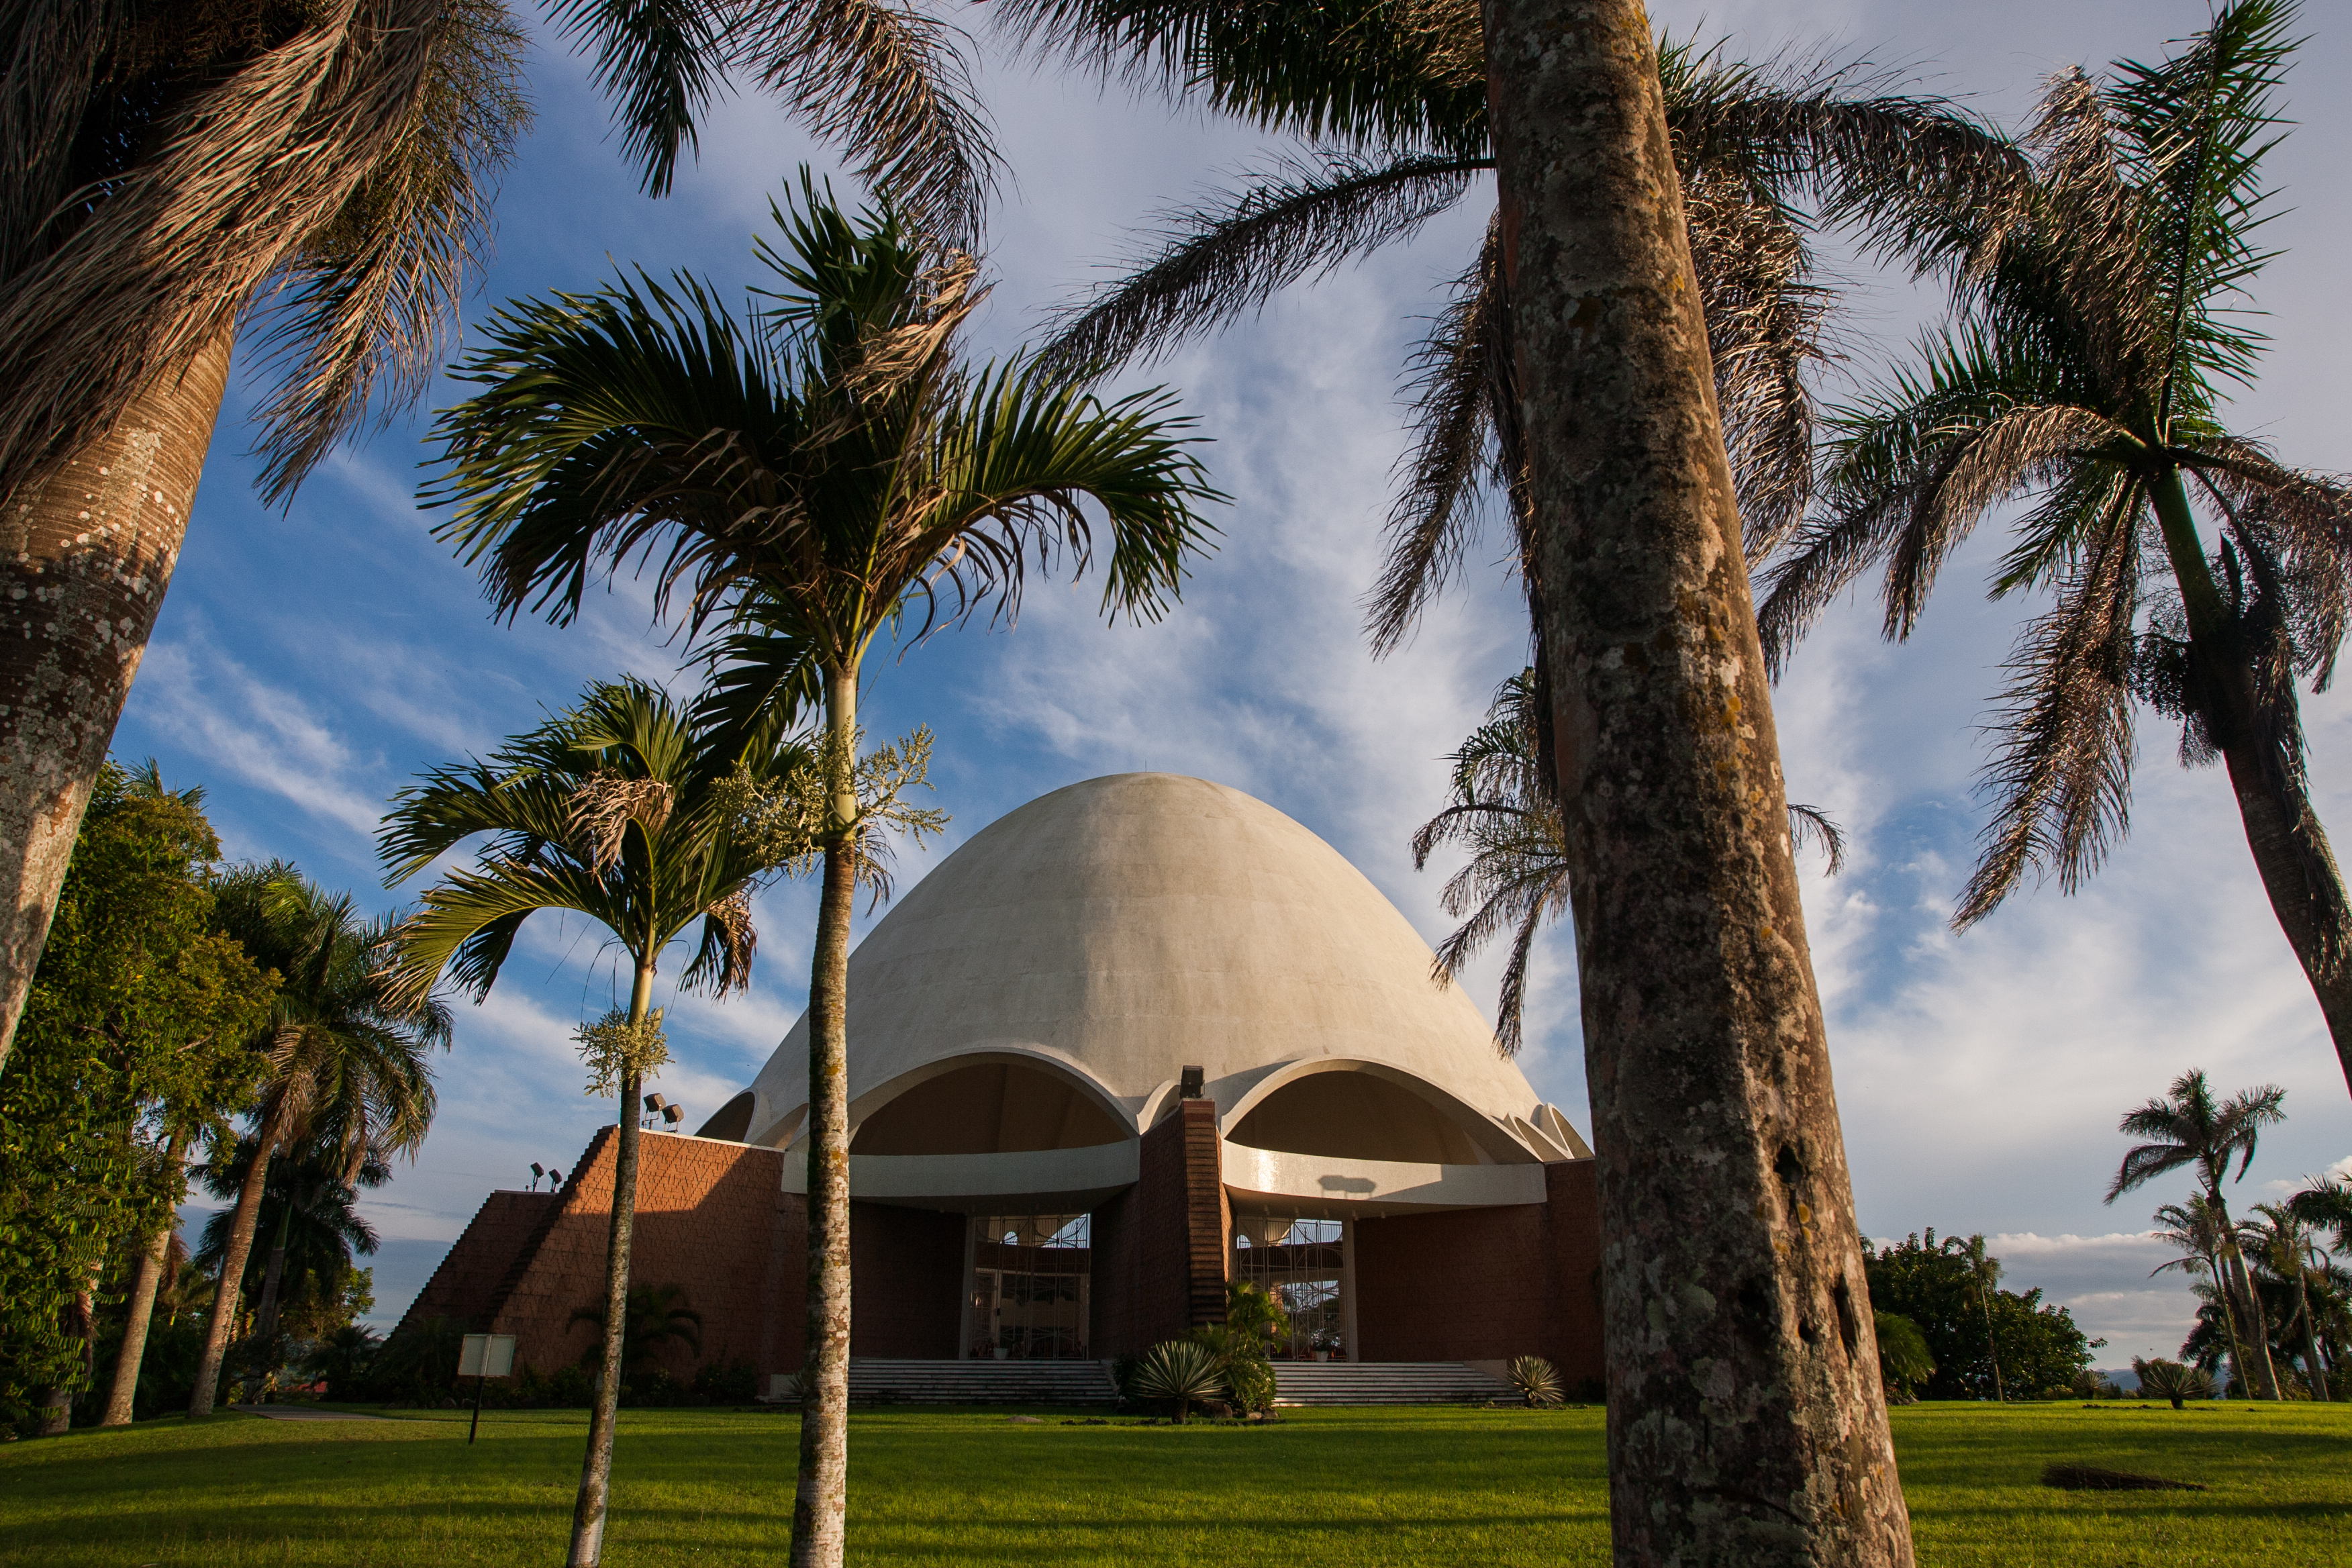 Continental Bahá’í House of Worship of Central America (Panama City, Panama) and surrounding gardens